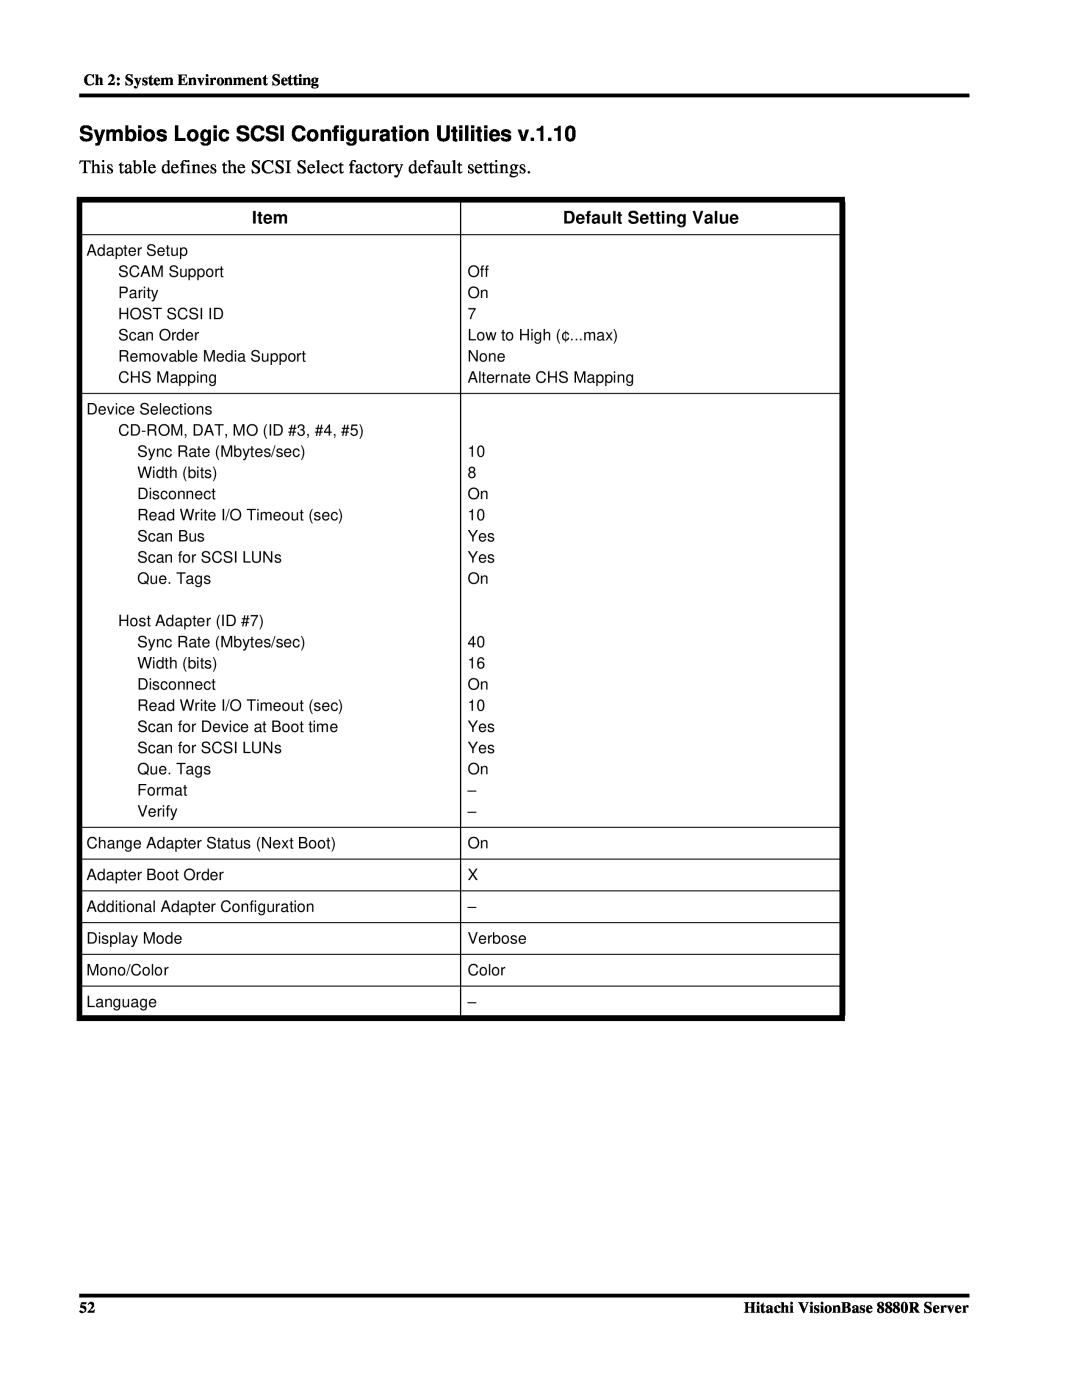 Hitachi 8880R Symbios Logic SCSI Configuration Utilities, This table defines the SCSI Select factory default settings 